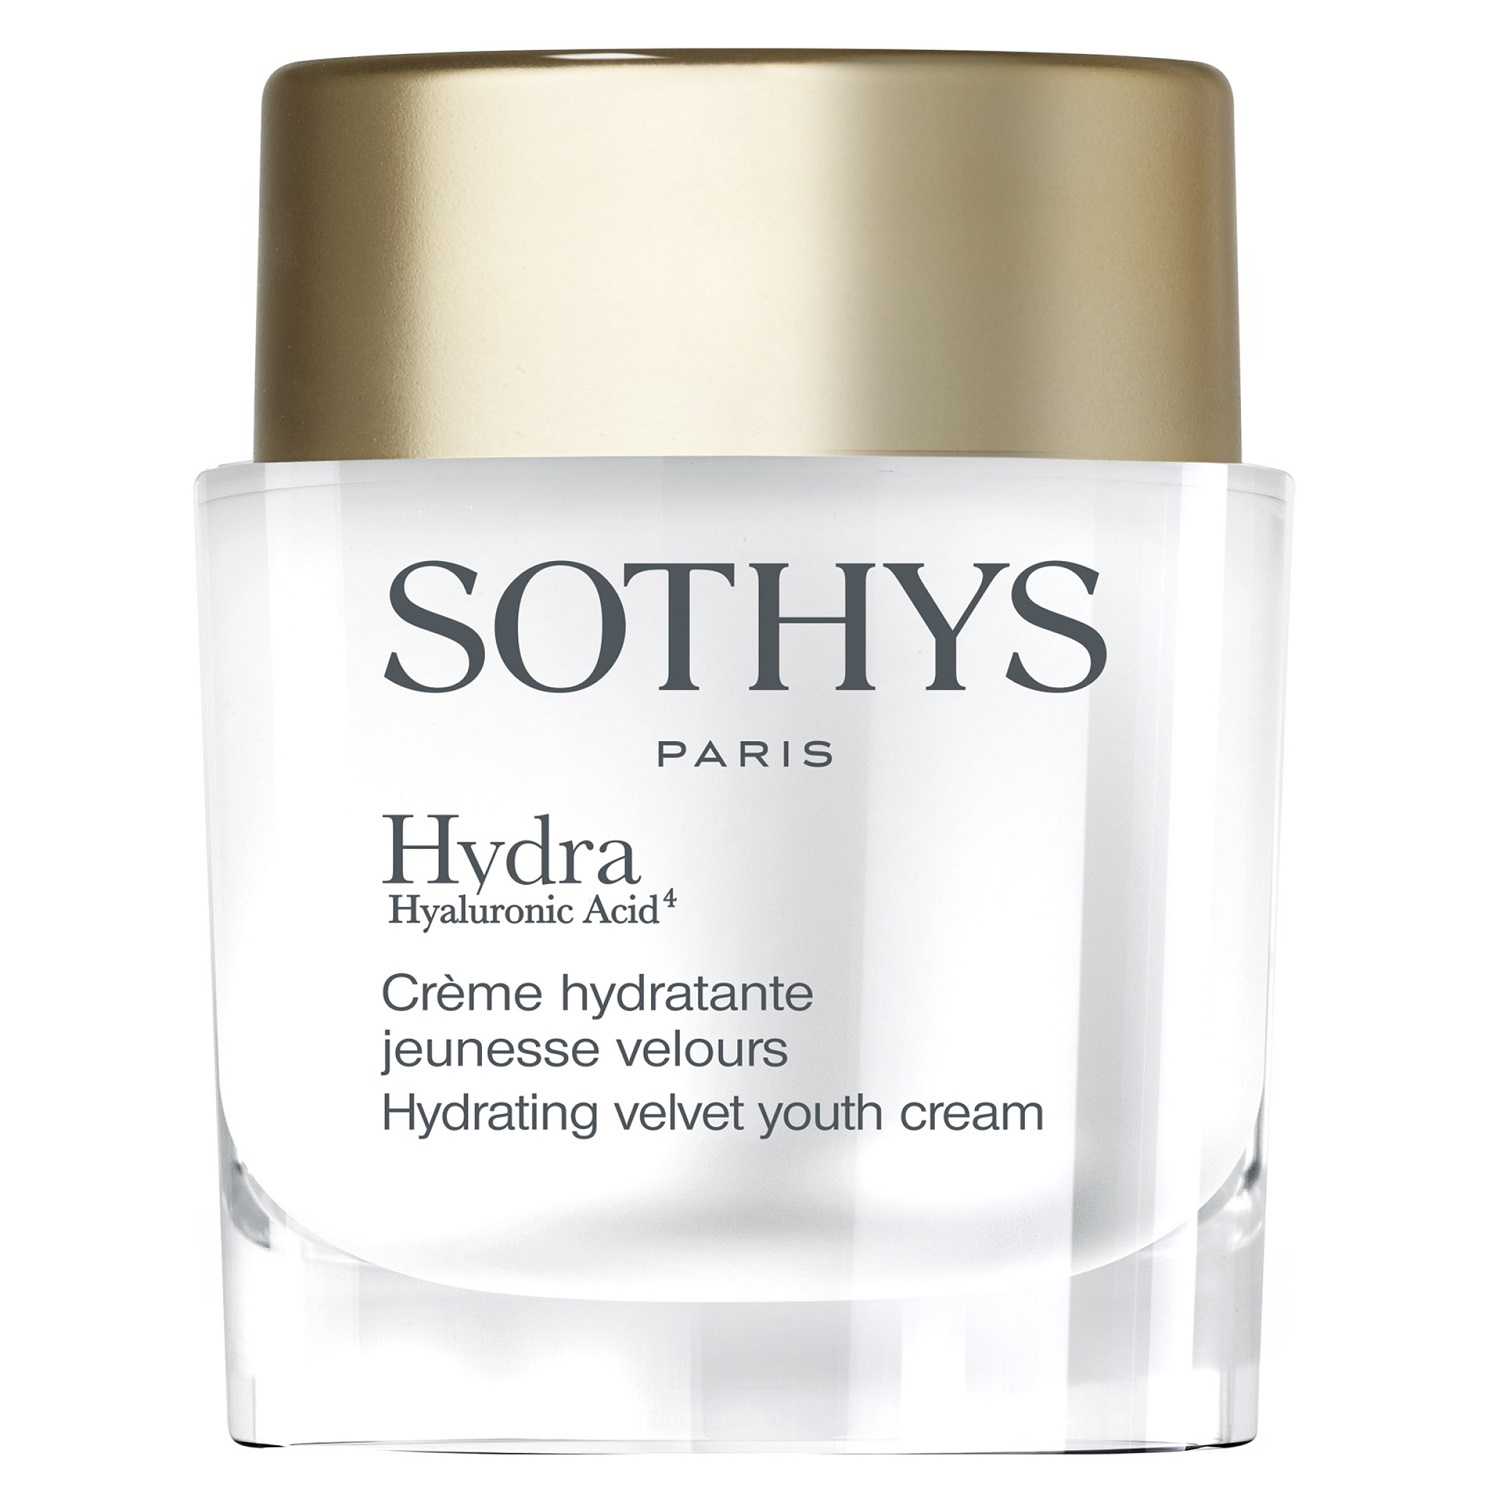 Sothys Насыщенный увлажняющий омолаживающий крем Hydrating velvet youth cream, 50 мл (Sothys, Hydra Hyaluronic Acid 4)